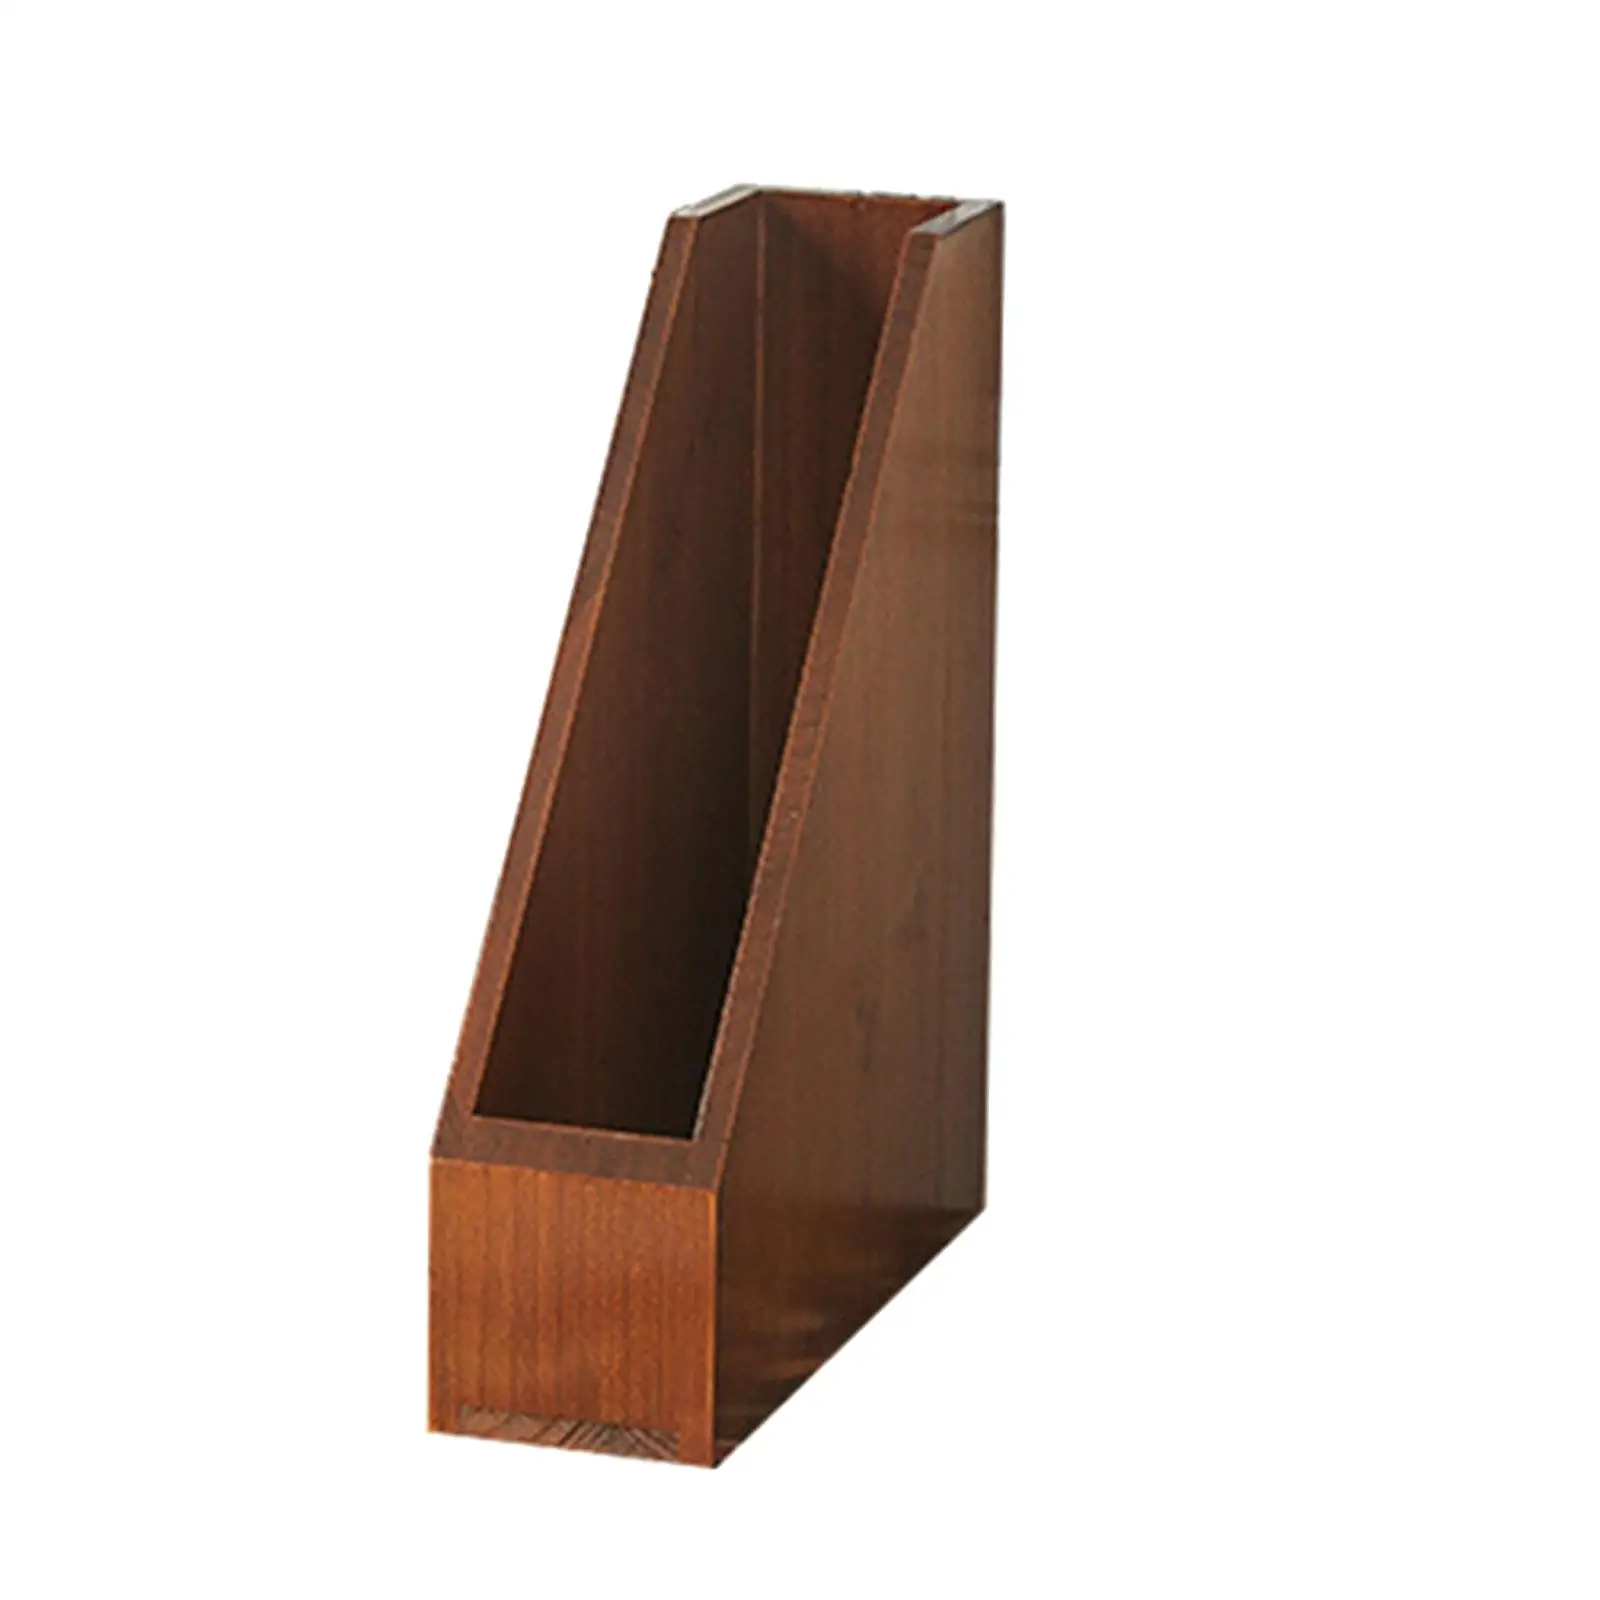 Desk Wooden Storage Box Durable Rustic Practical Multifunctional Classic Portable for Home Desktop Countertop School